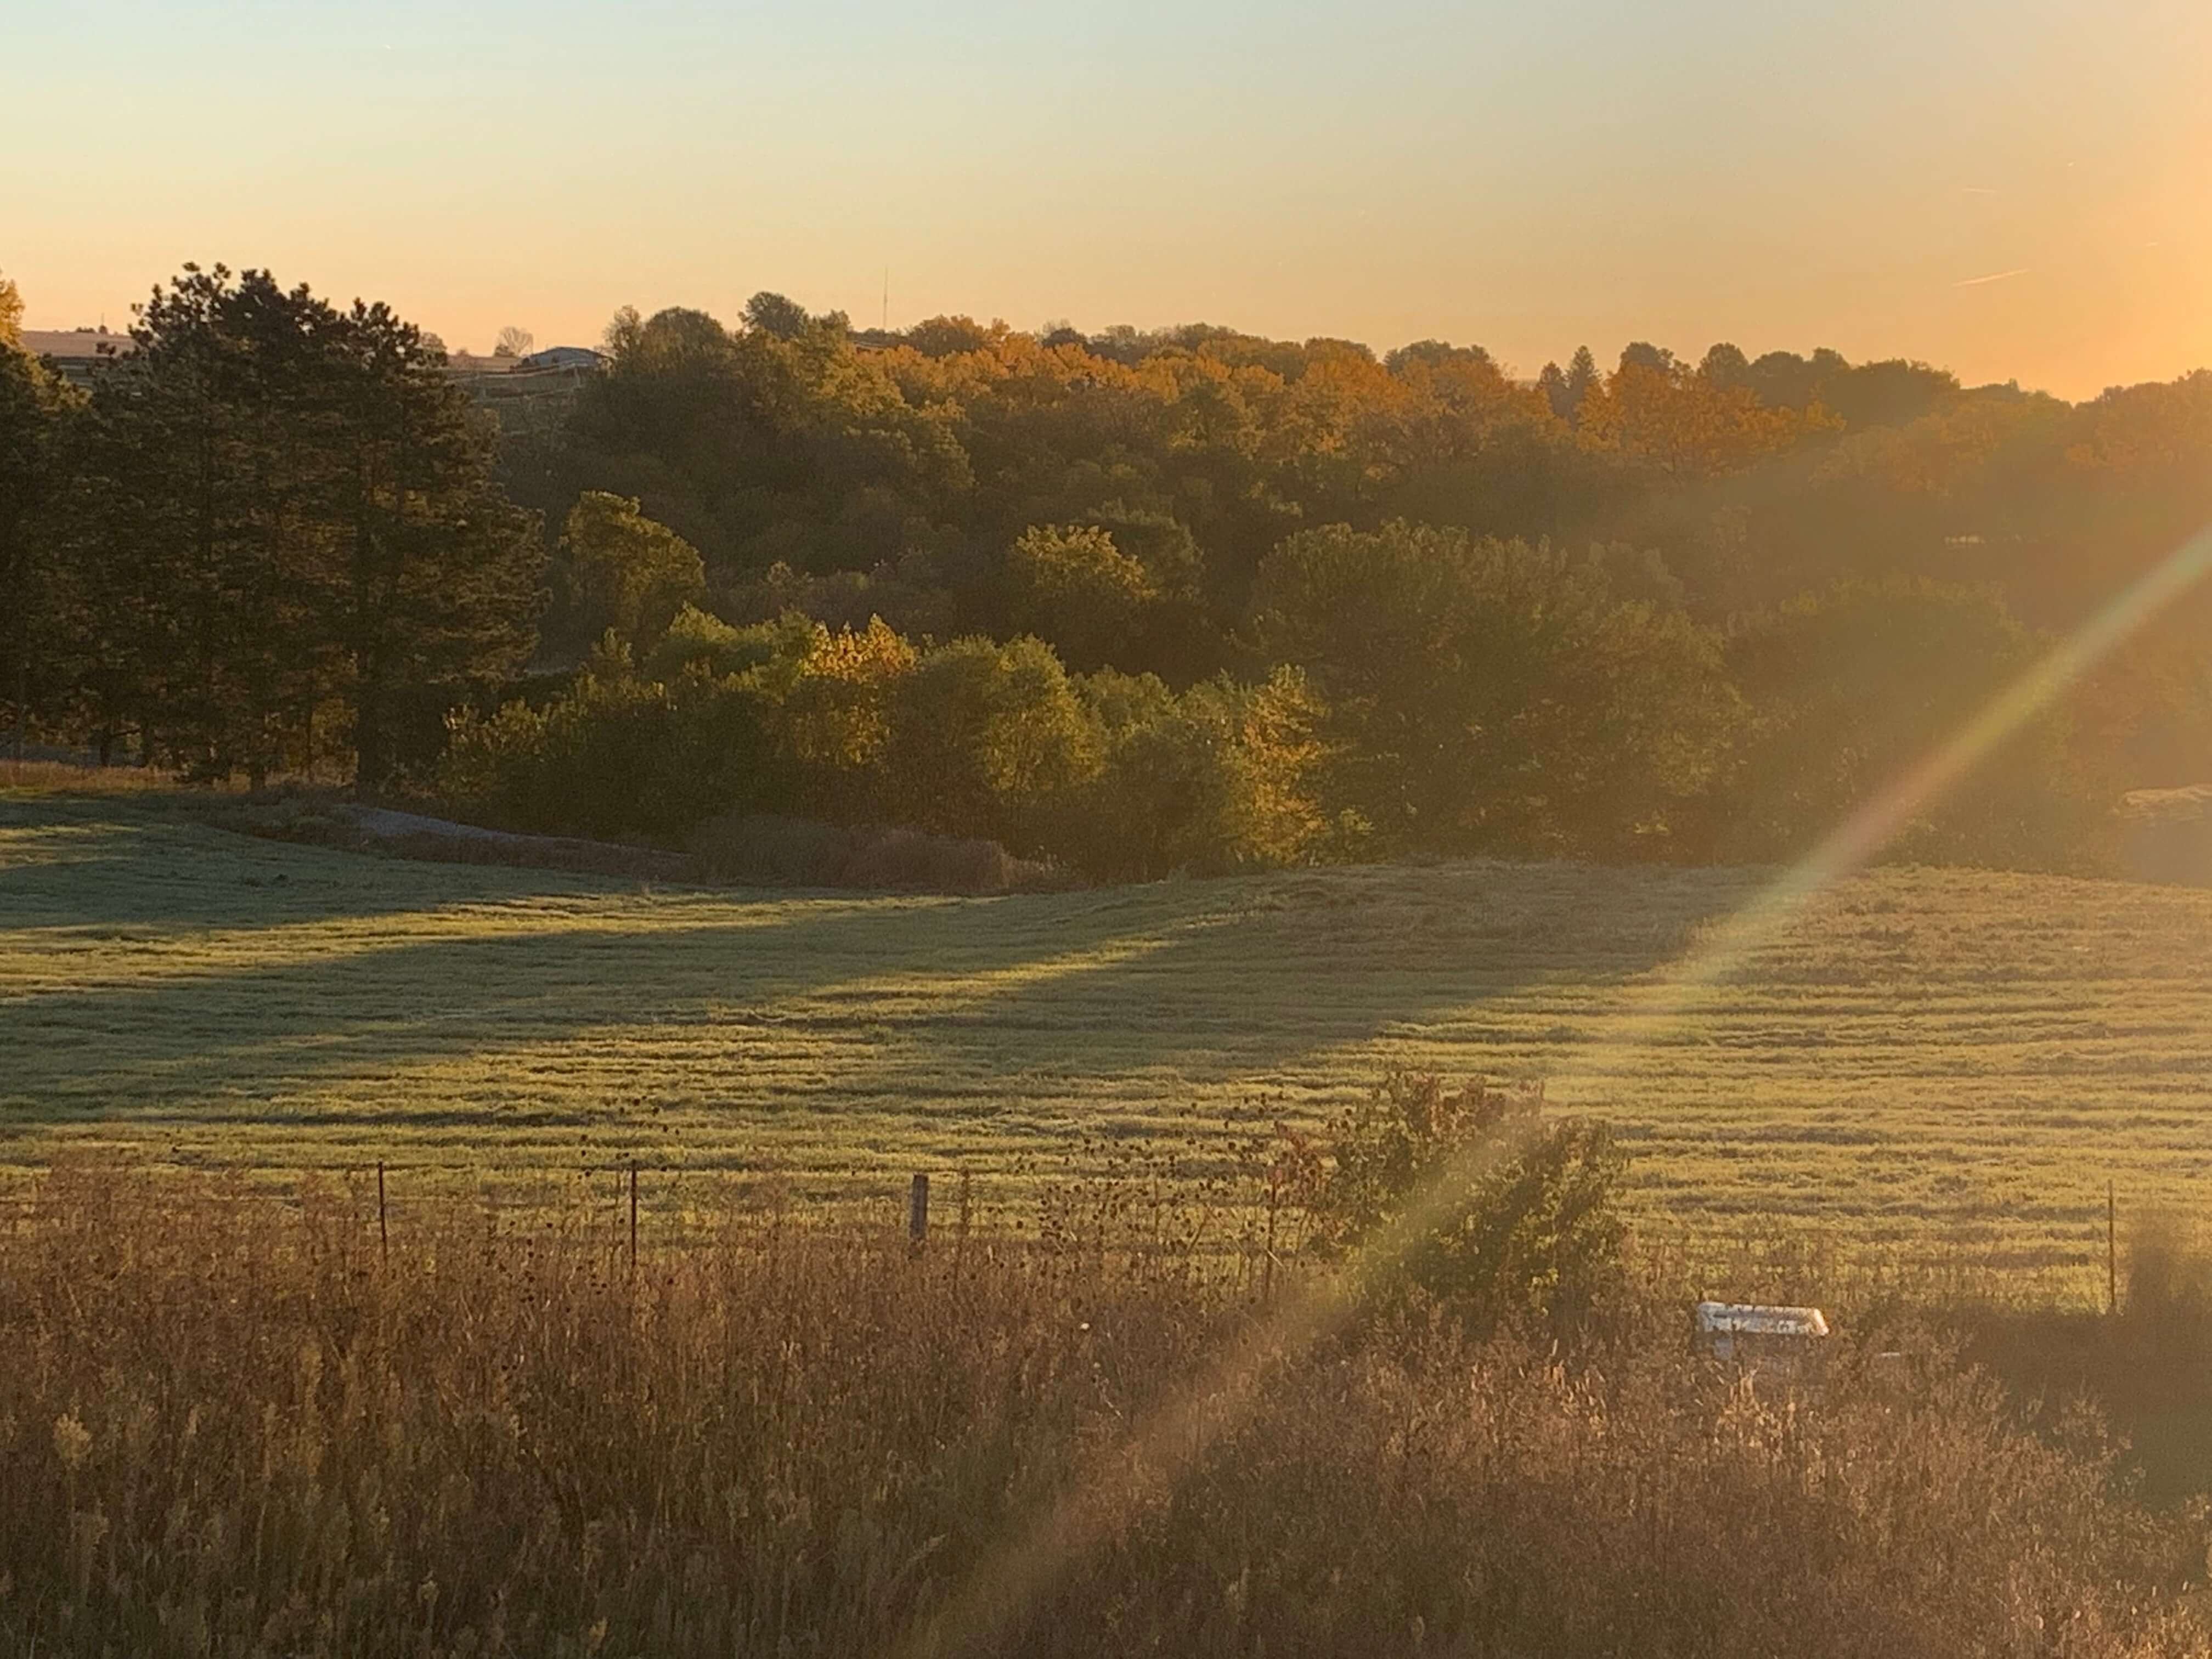 Rural Iowa landscape shown at dusk.